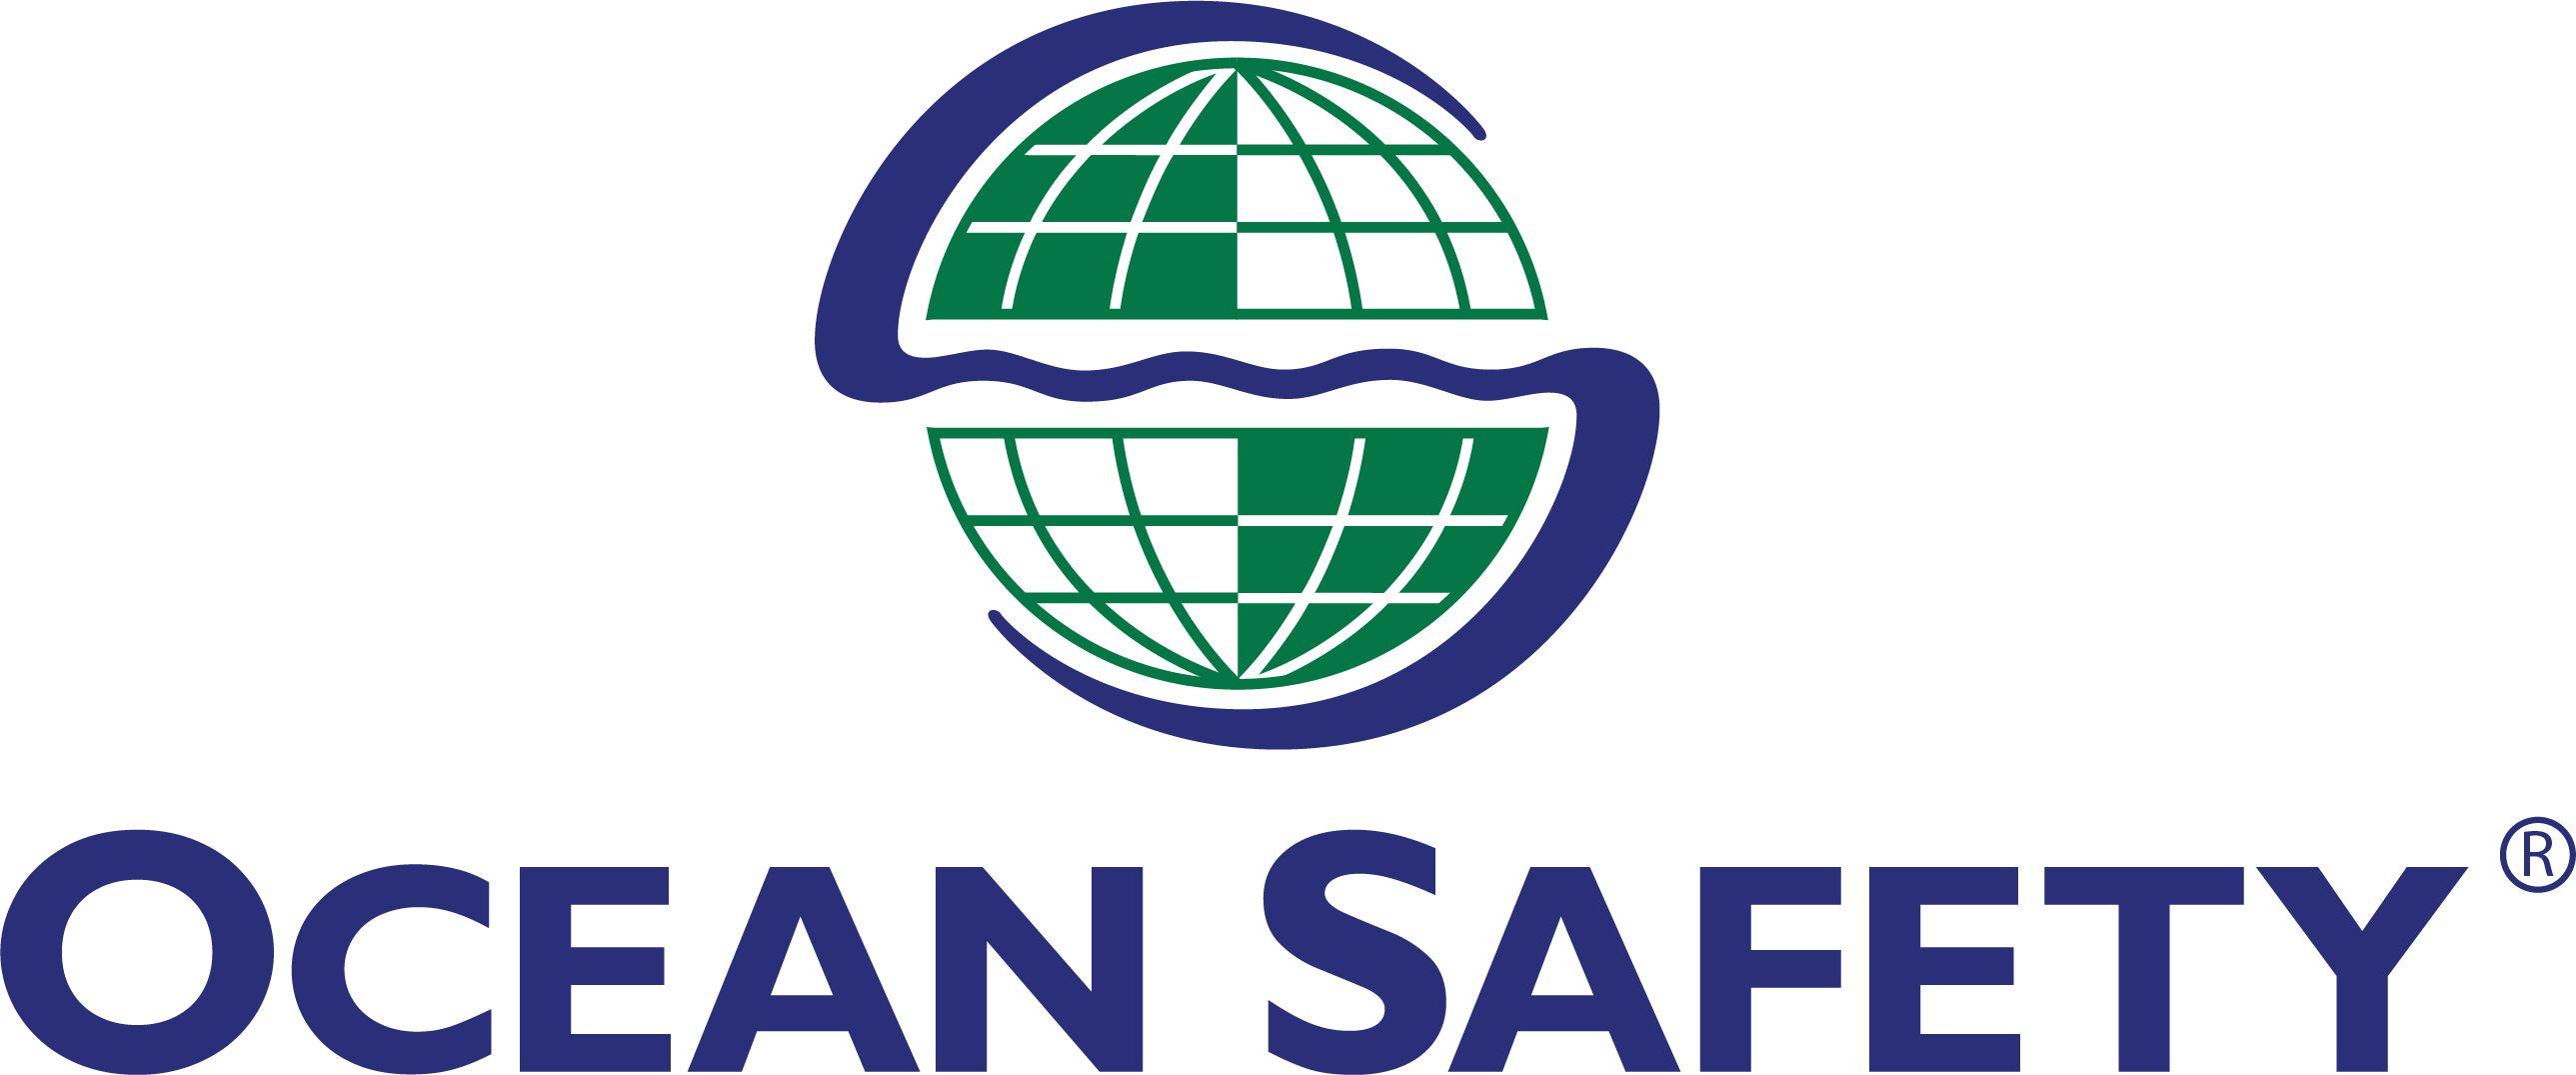 Safety Logo - Ocean Safety Ltd - Home